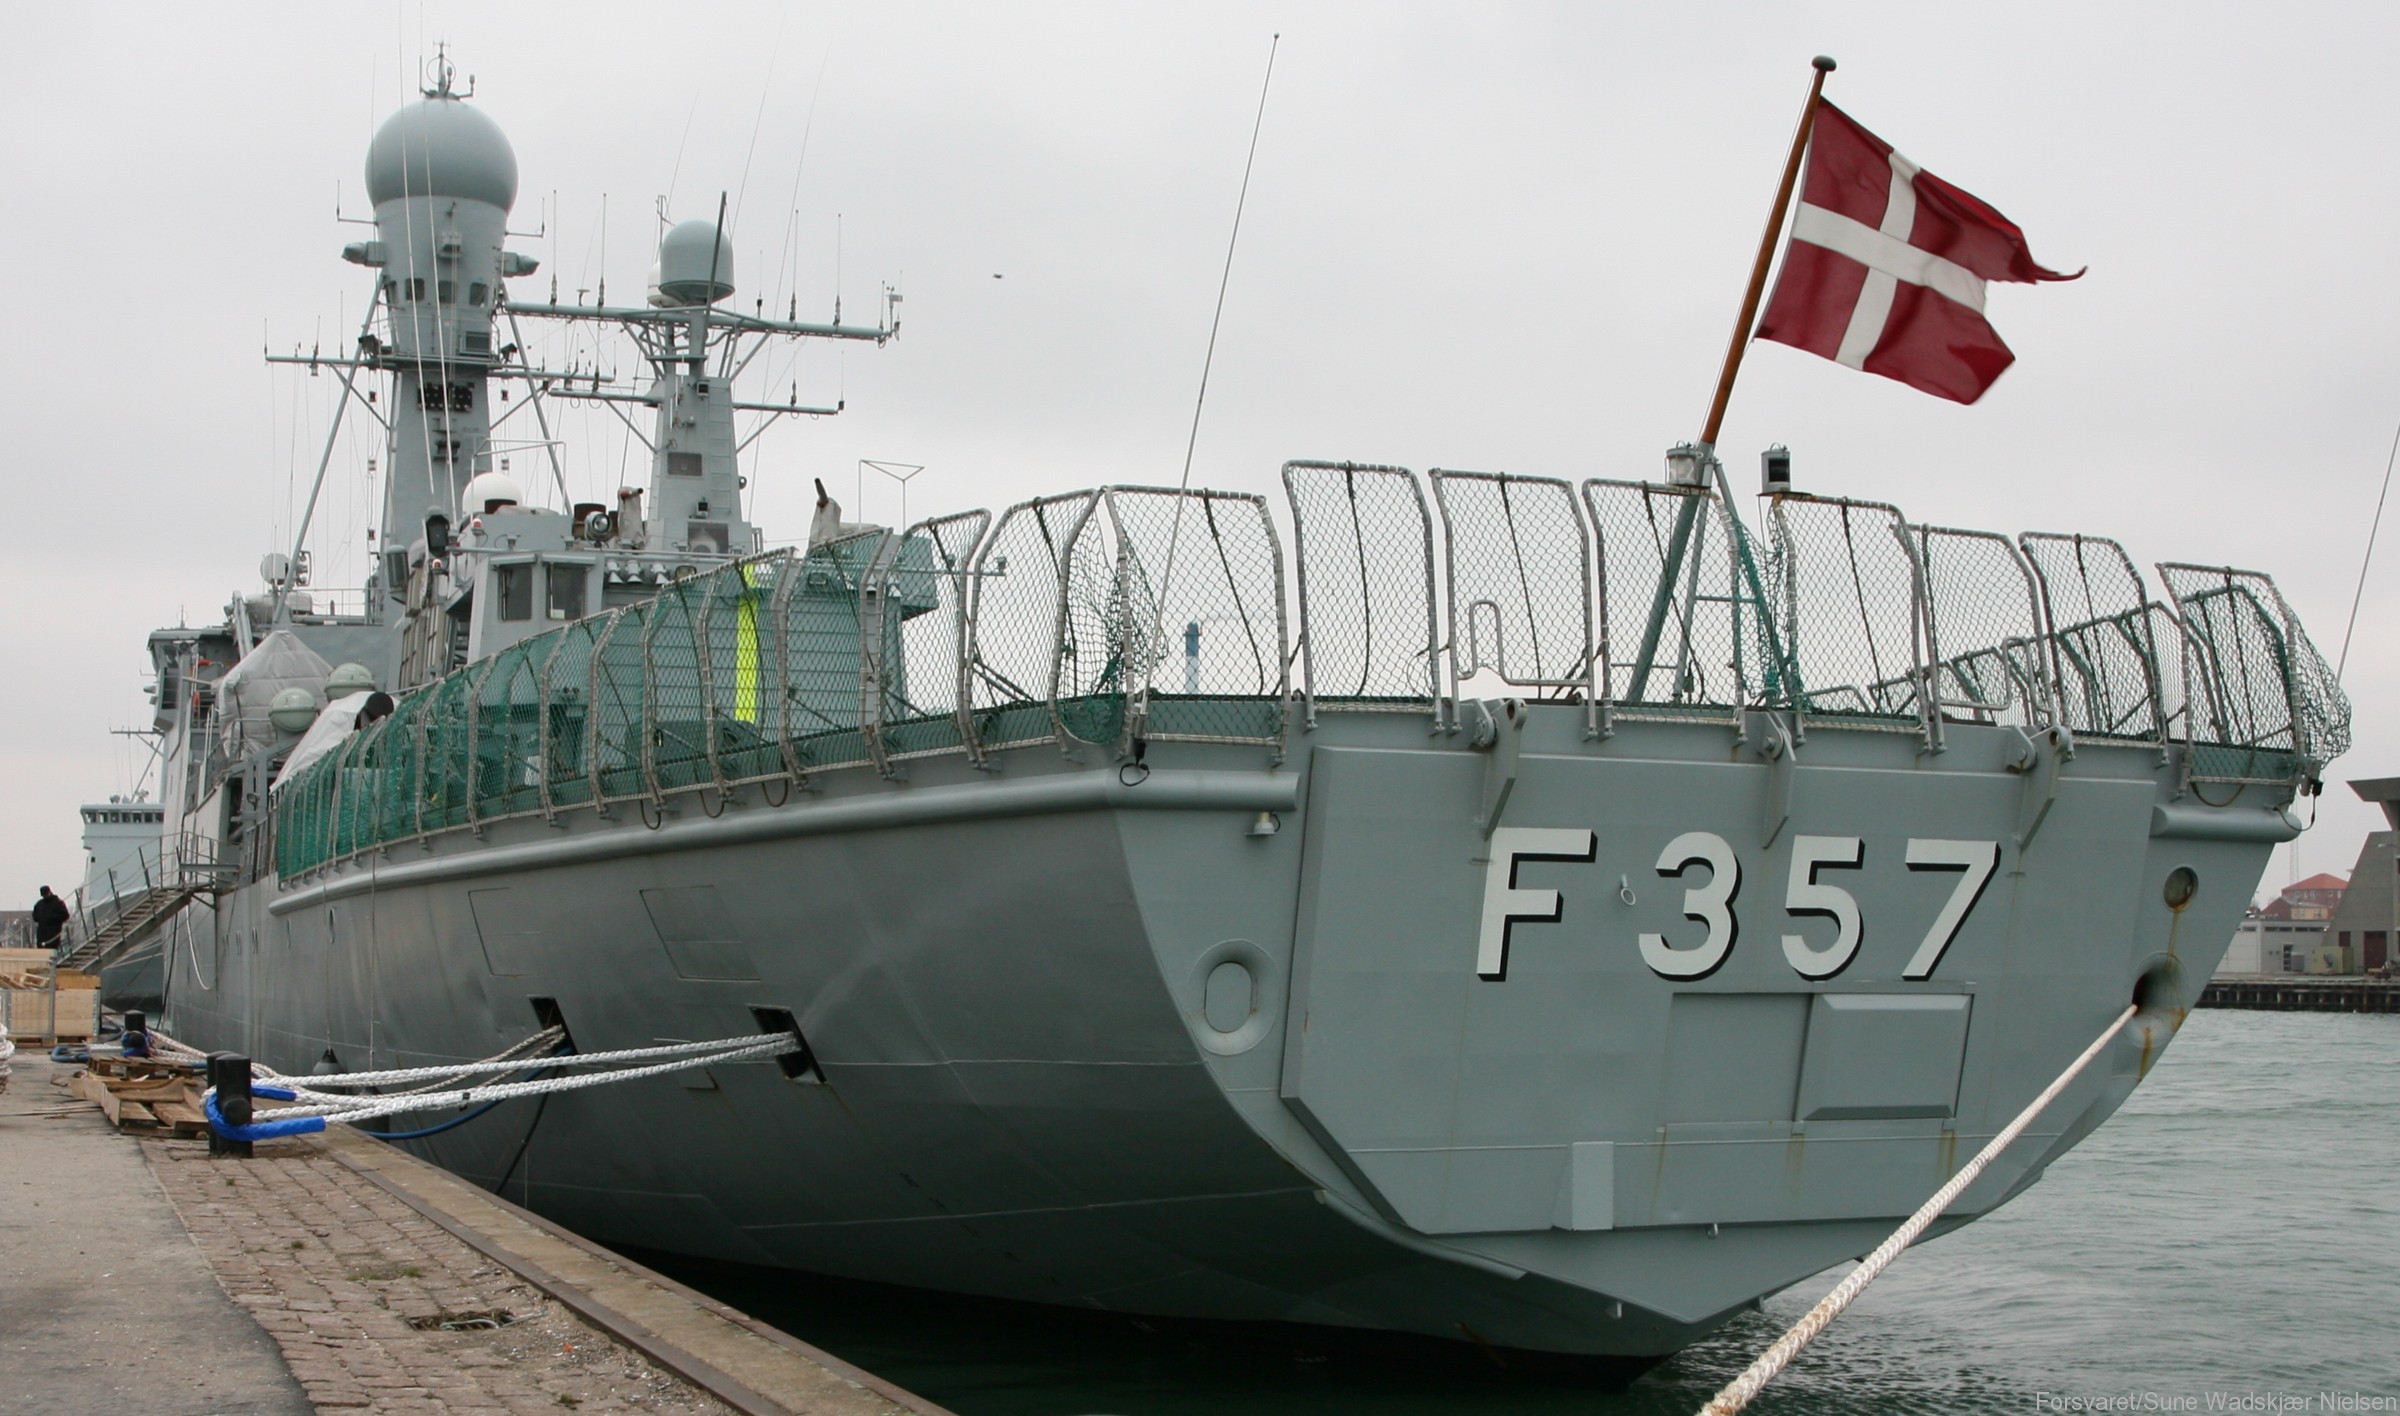 f-357 hdms thetis ocean patrol frigate royal danish navy kongelige danske marine inspektionsskibet 38